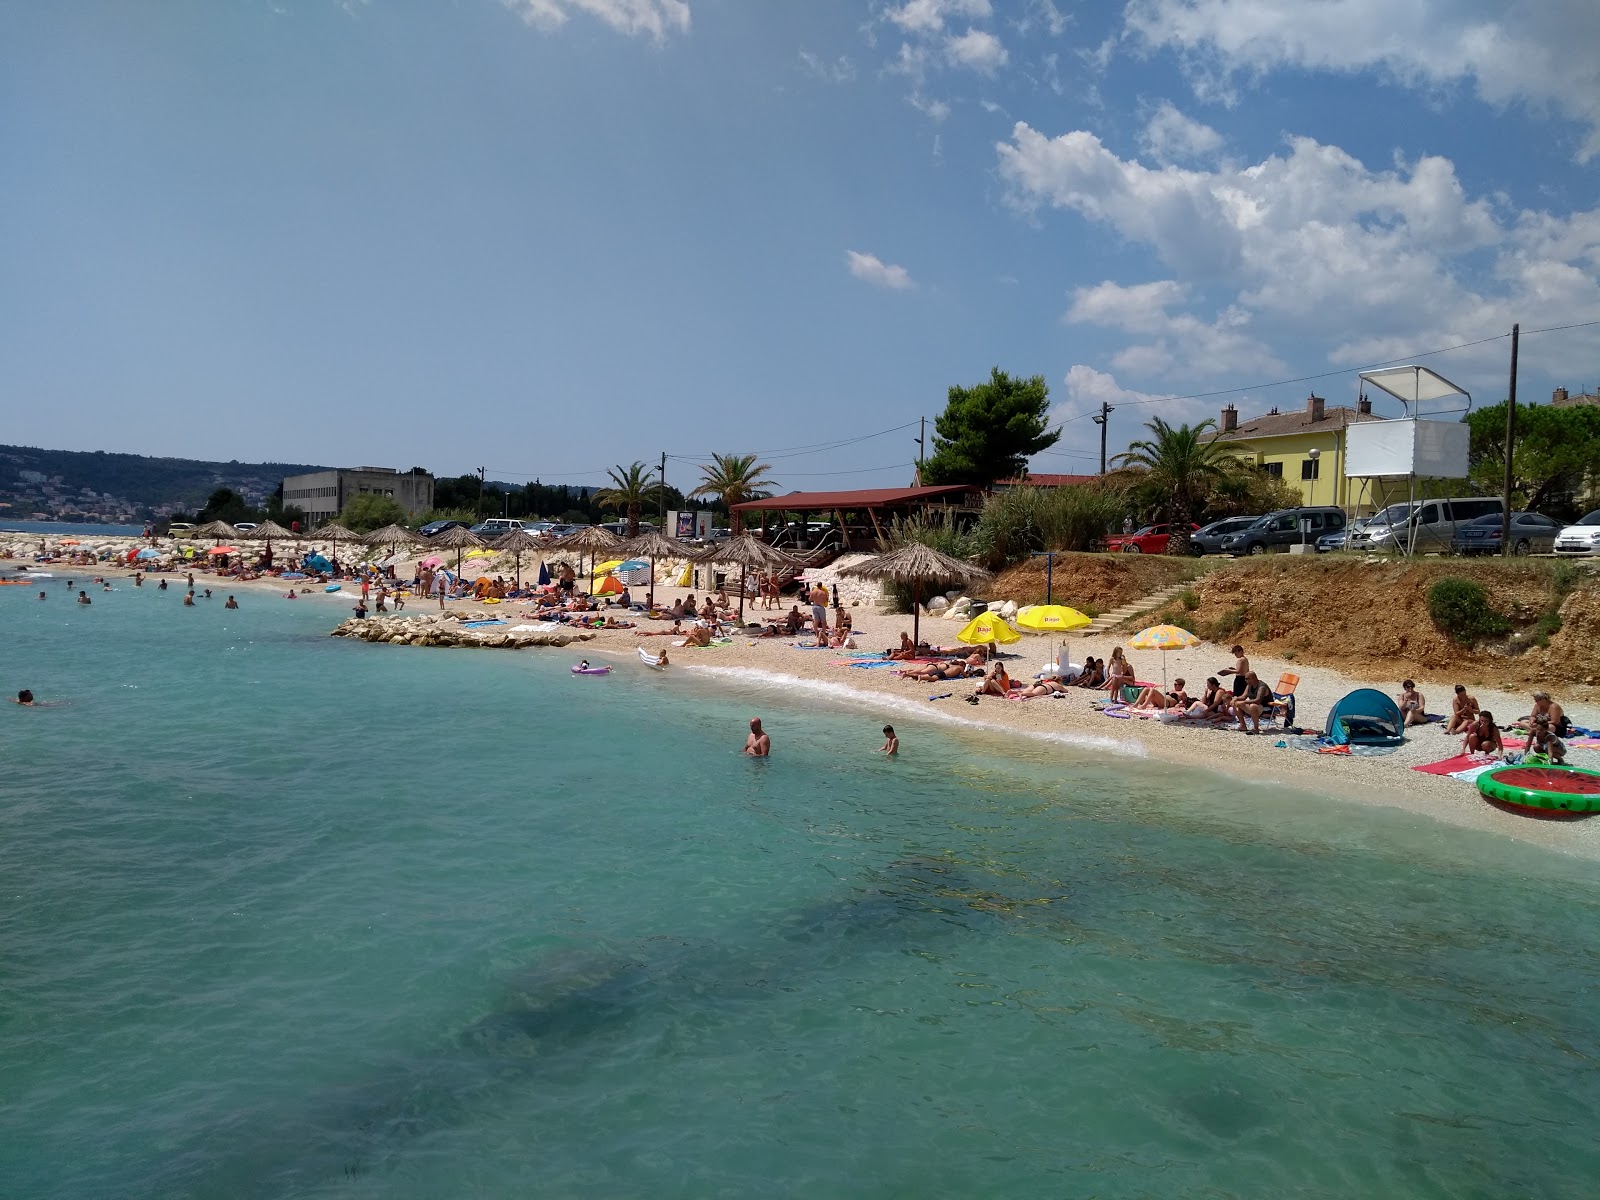 Photo of Divulje beach beach resort area